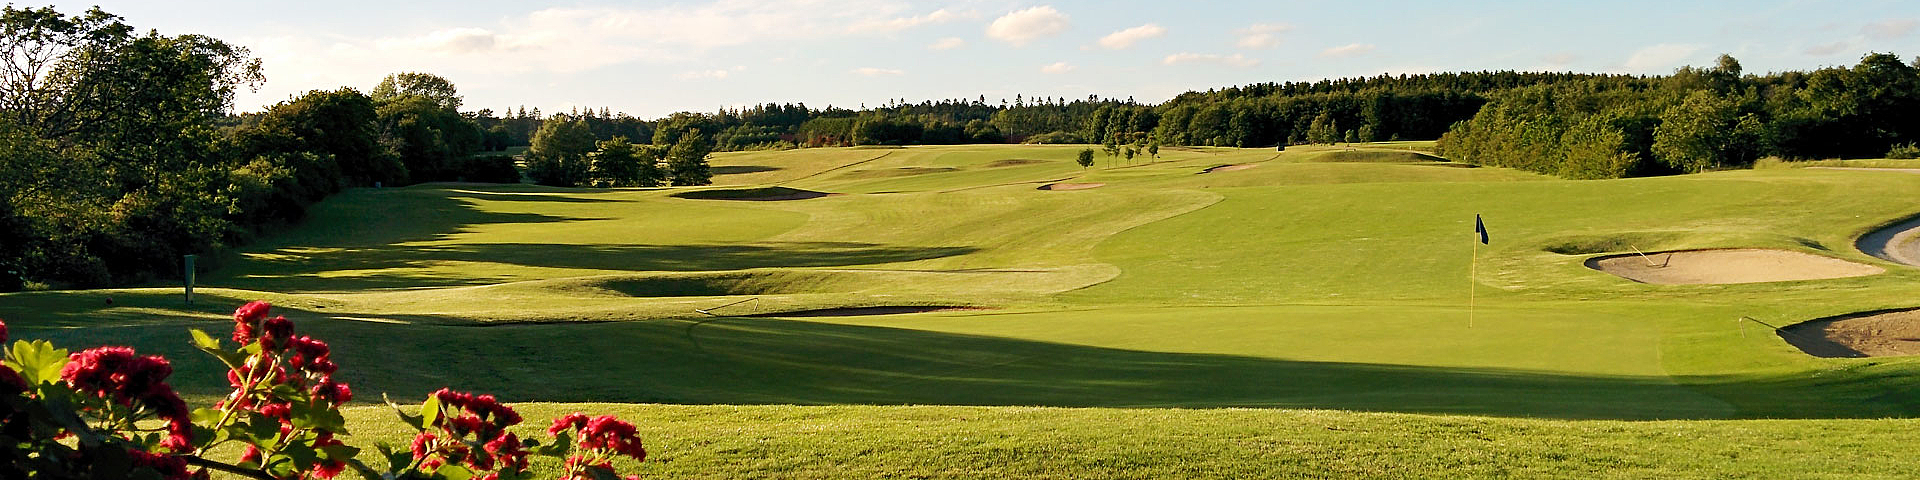 Svendborg Golf Klub | Golfbane Fyn |